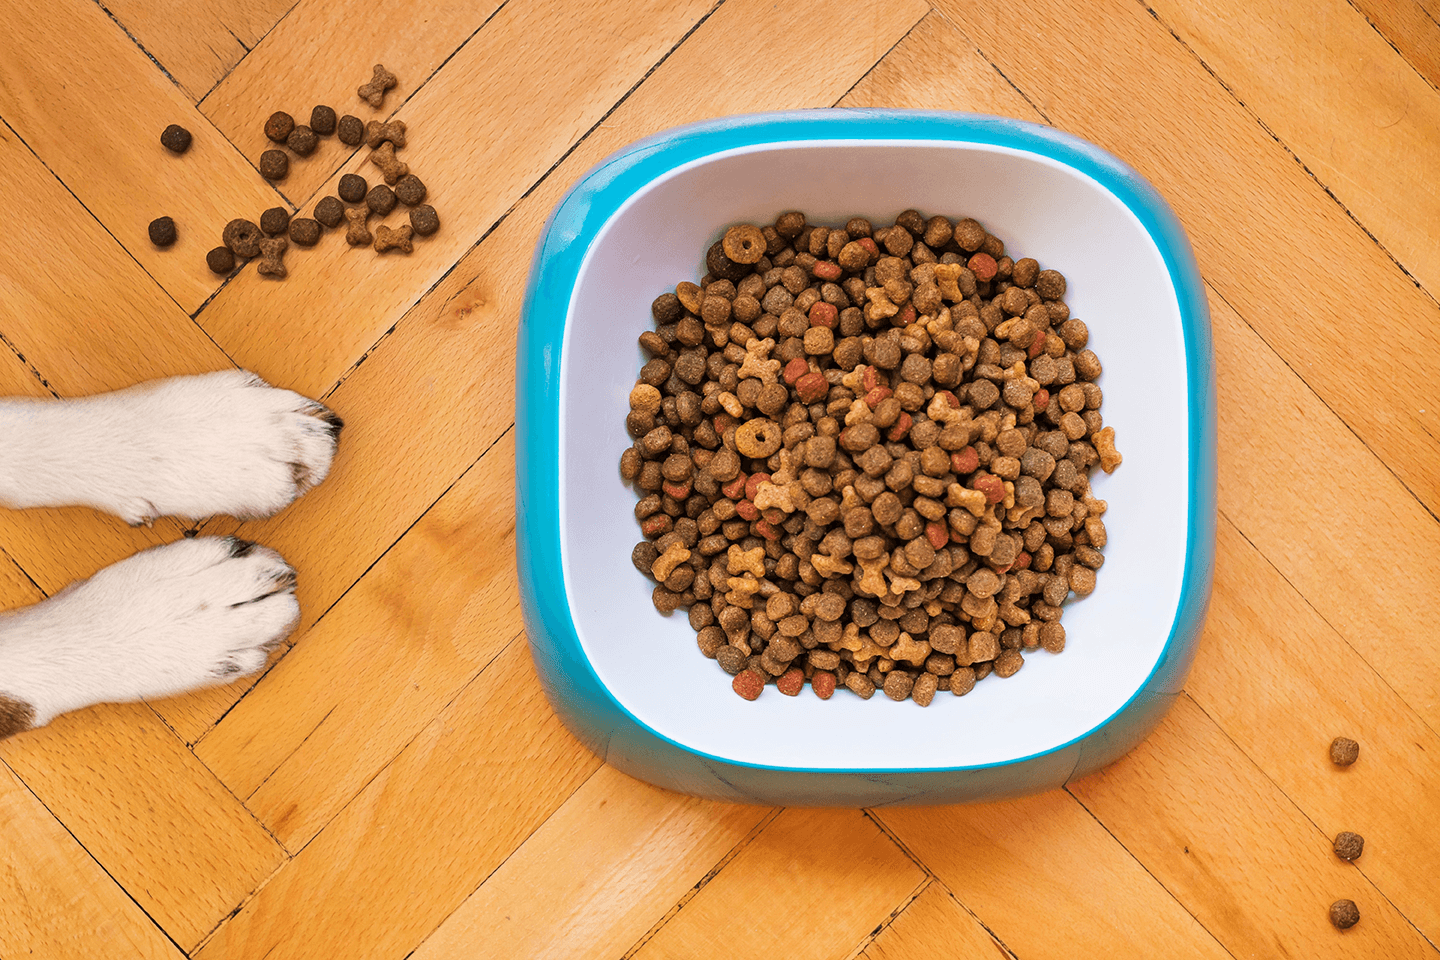 How much food should I feed my dog?